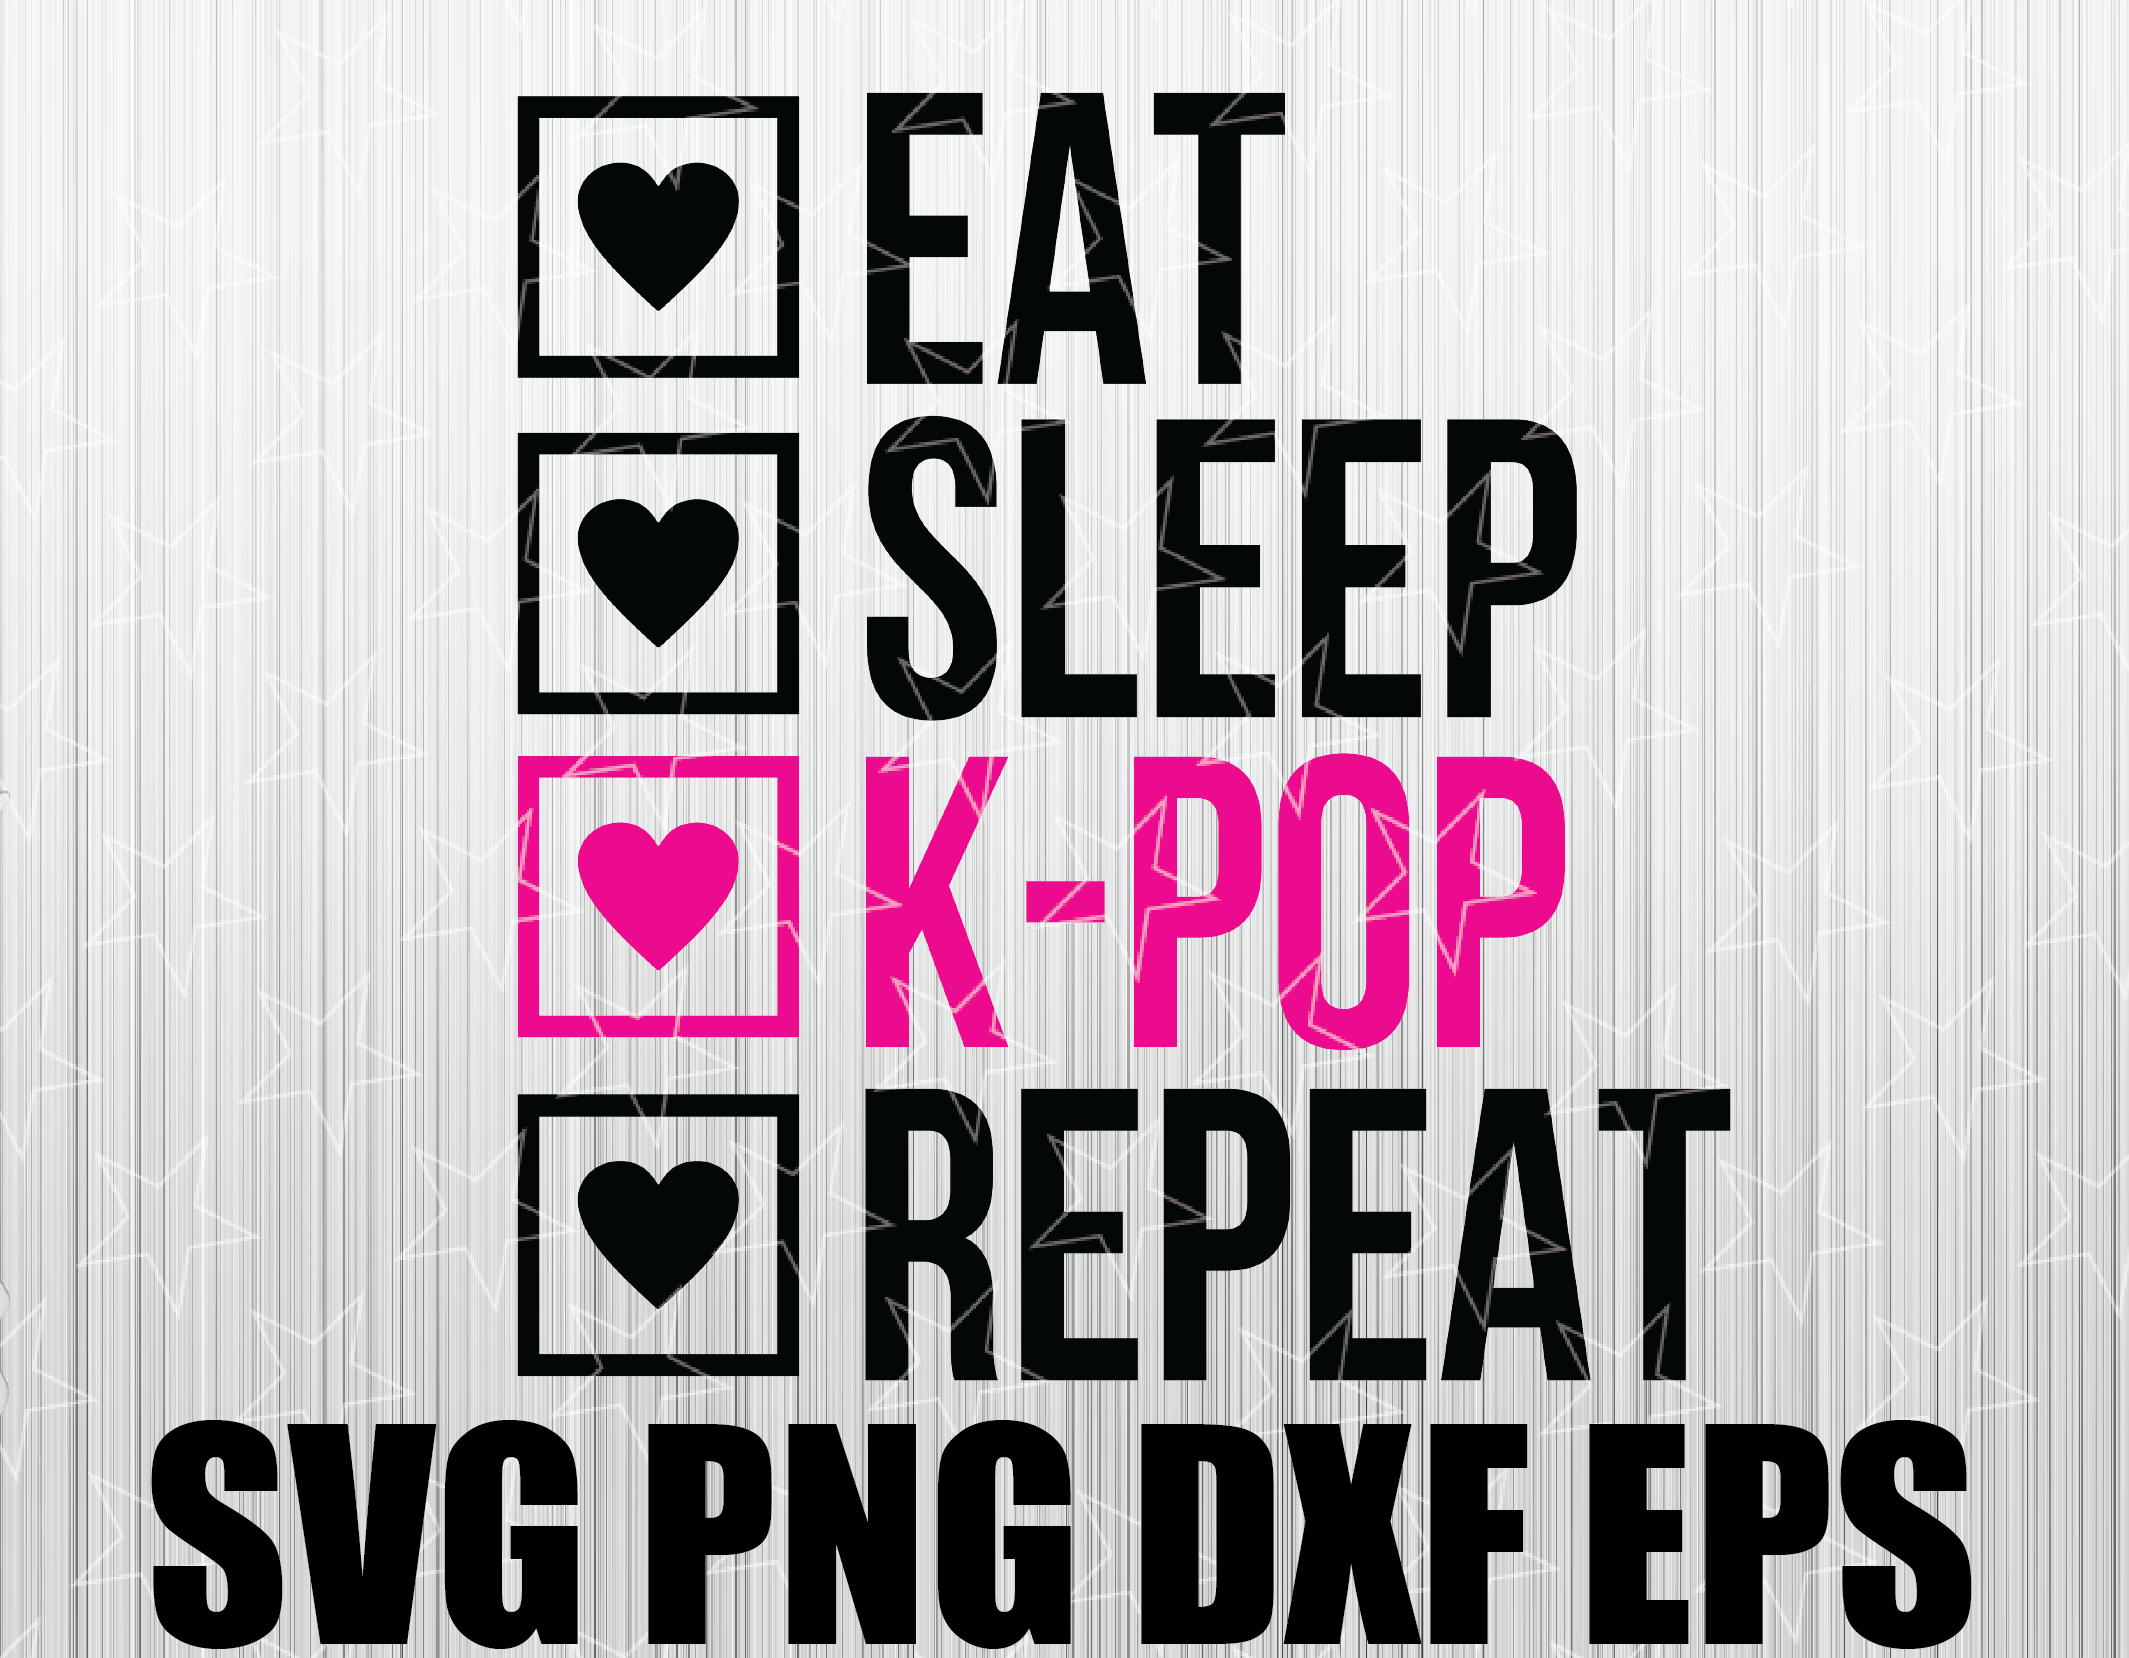 Download Eat Sleep K Pop Repeat Svg Png Dxf Eps Jpg Cricut Silhouette Shirt Bts Army Blackpink Exo Nct Got7 Monstax Wanna One 17 Stray Kids Ateez Designbtf Com